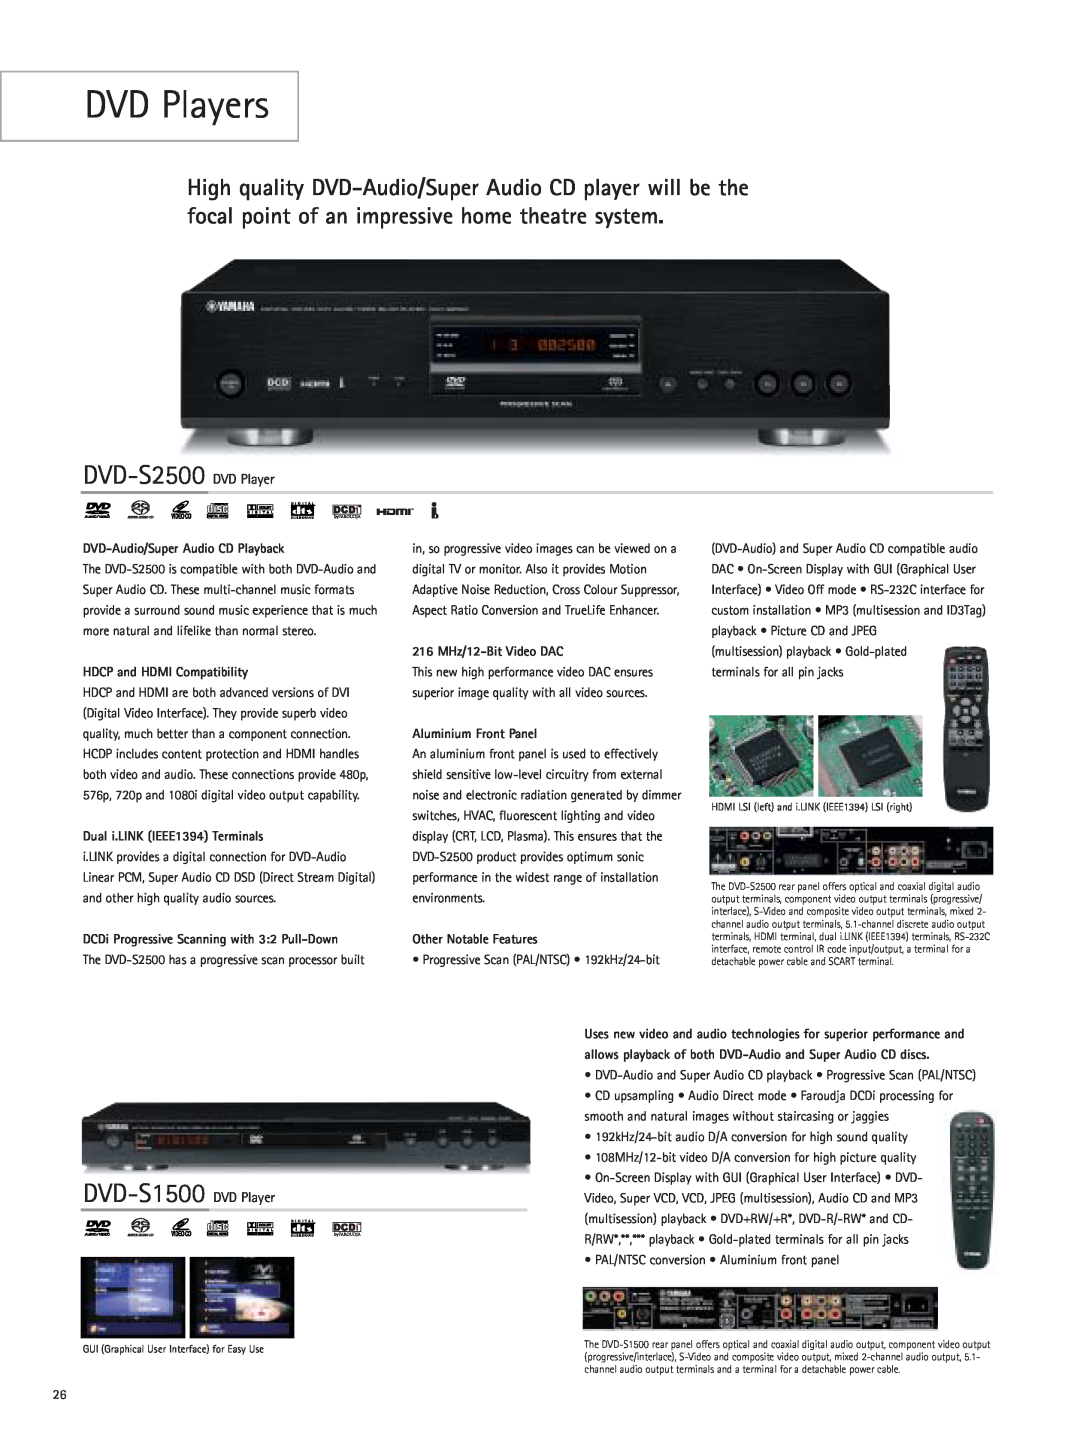 Yamaha RX-Z9 manual DVD Players, DVD-S2500 DVD Player, DVD-S1500 DVD Player, DVD-Audio/SuperAudio CD Playback 